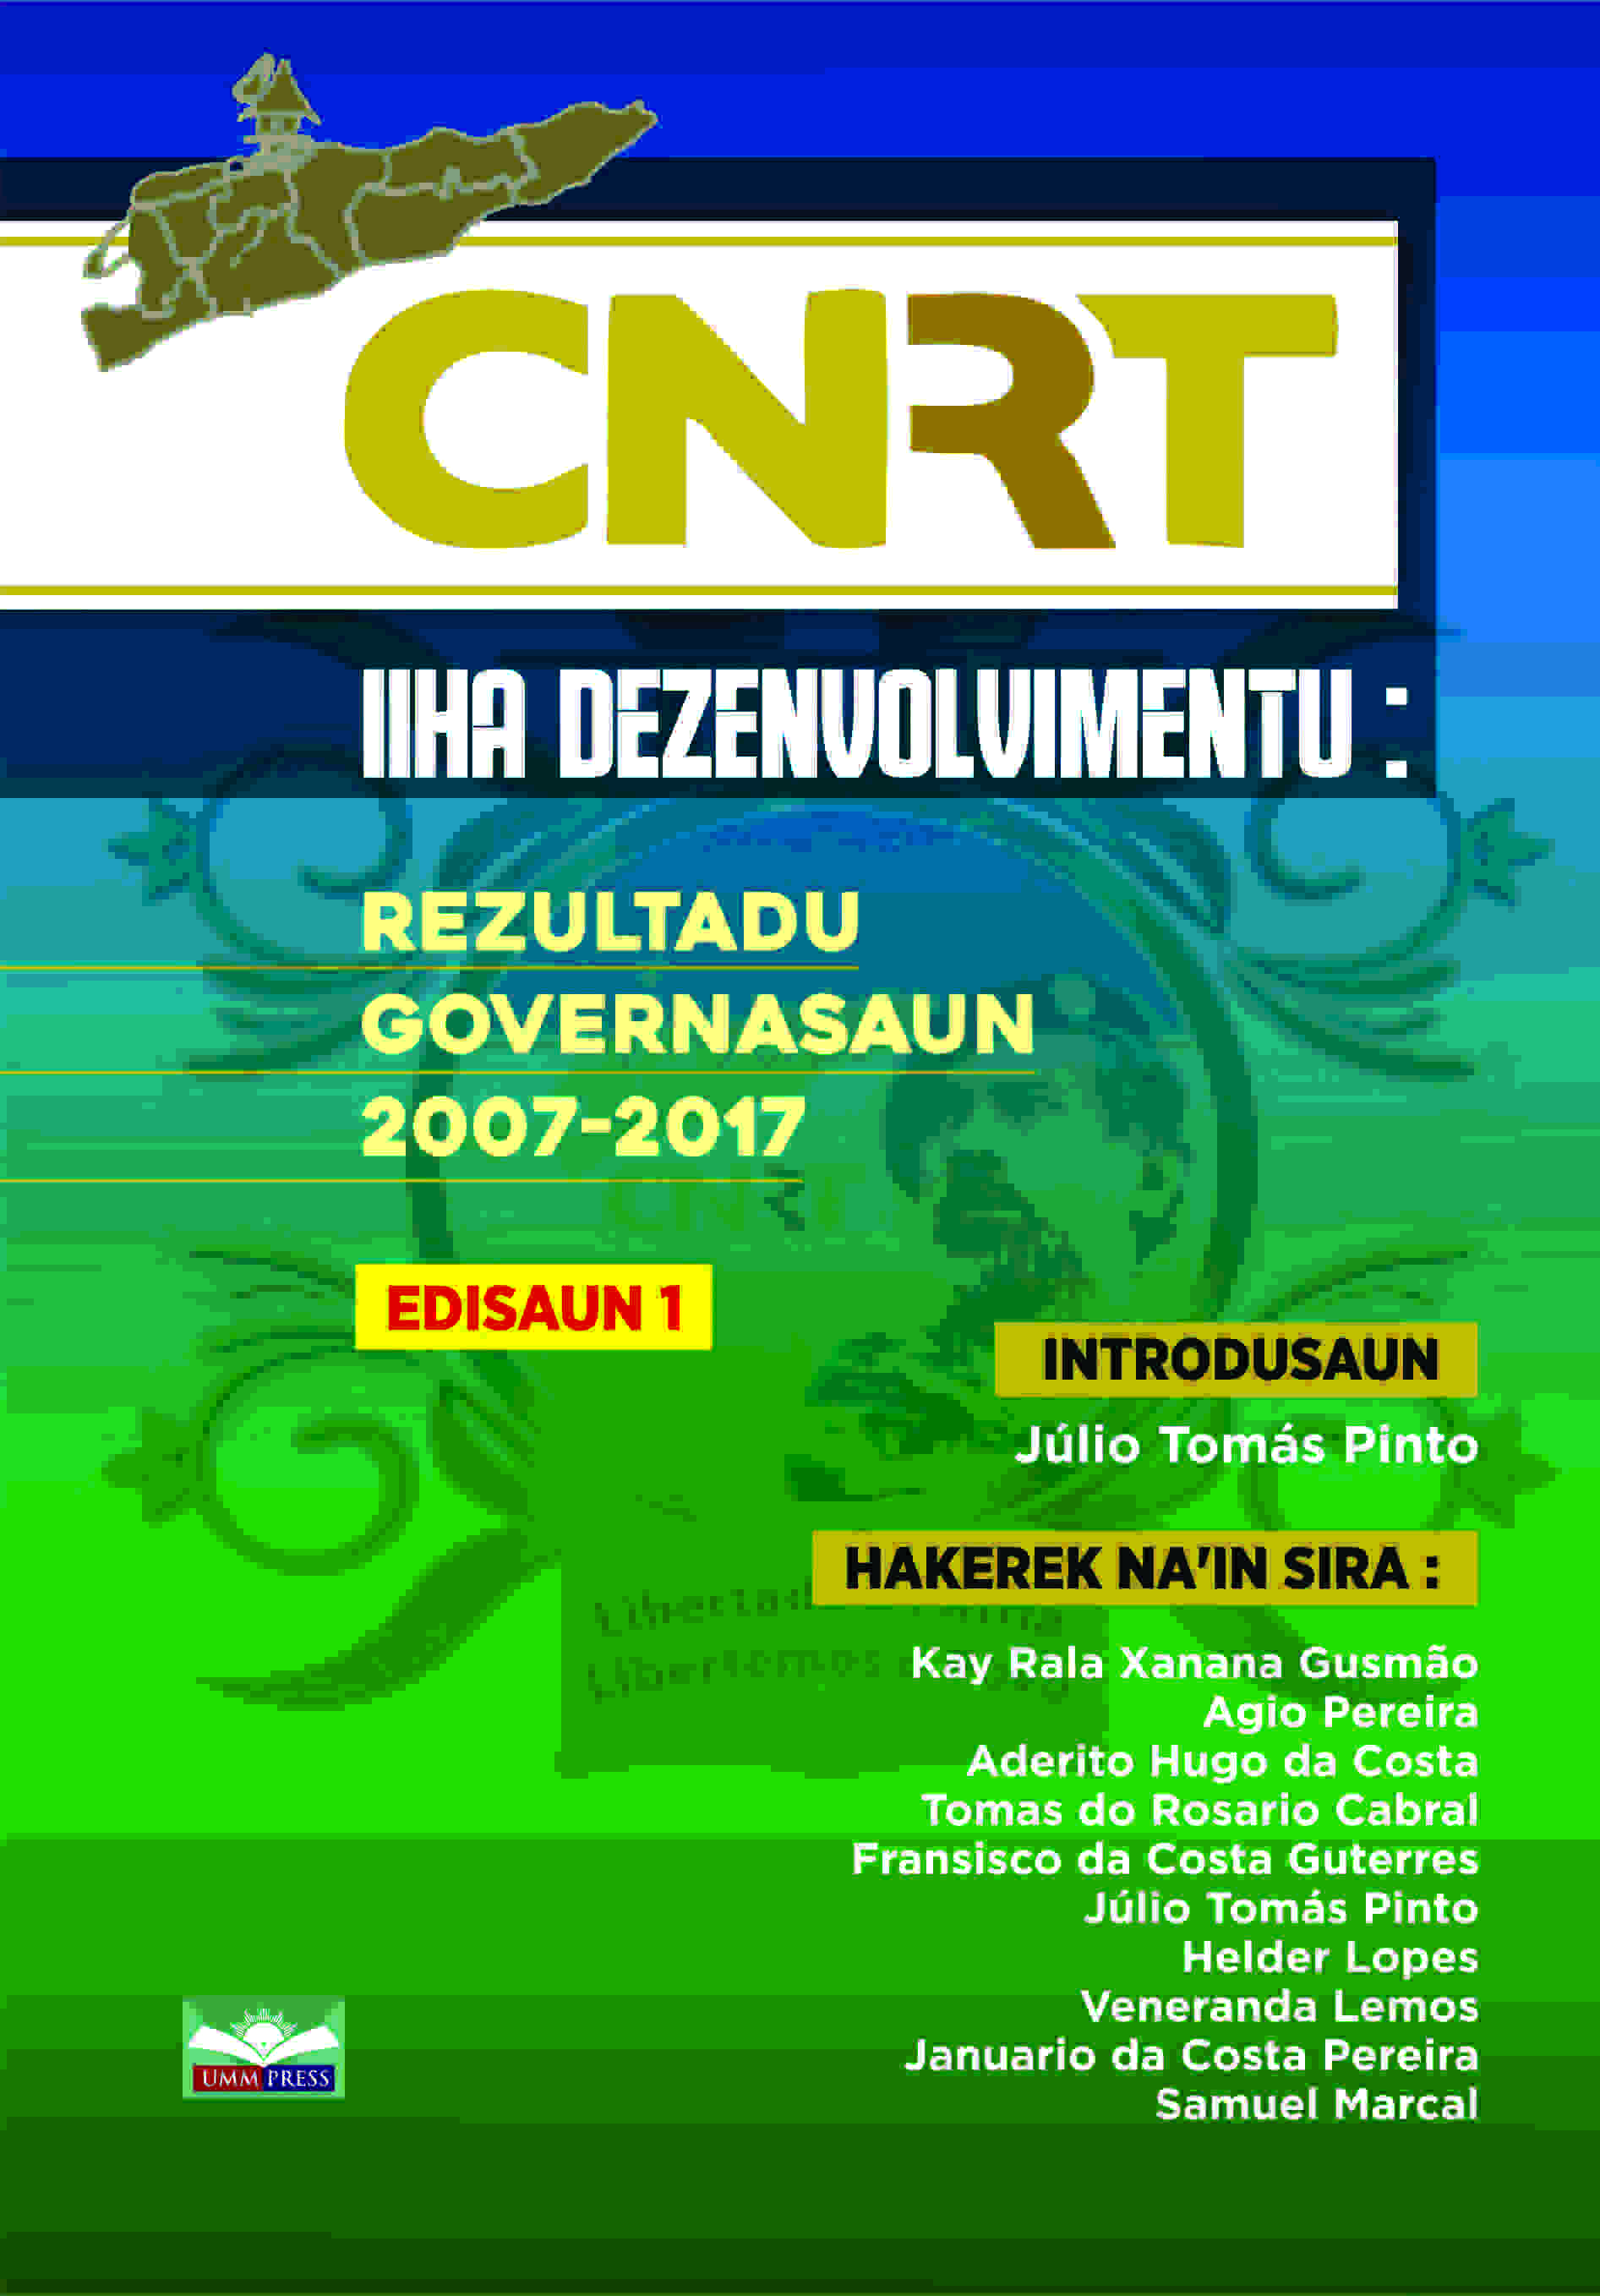 CNRT IHA DEZENVOLVIMENTU: REZULTADU GOVERNASAUN 2007-2017